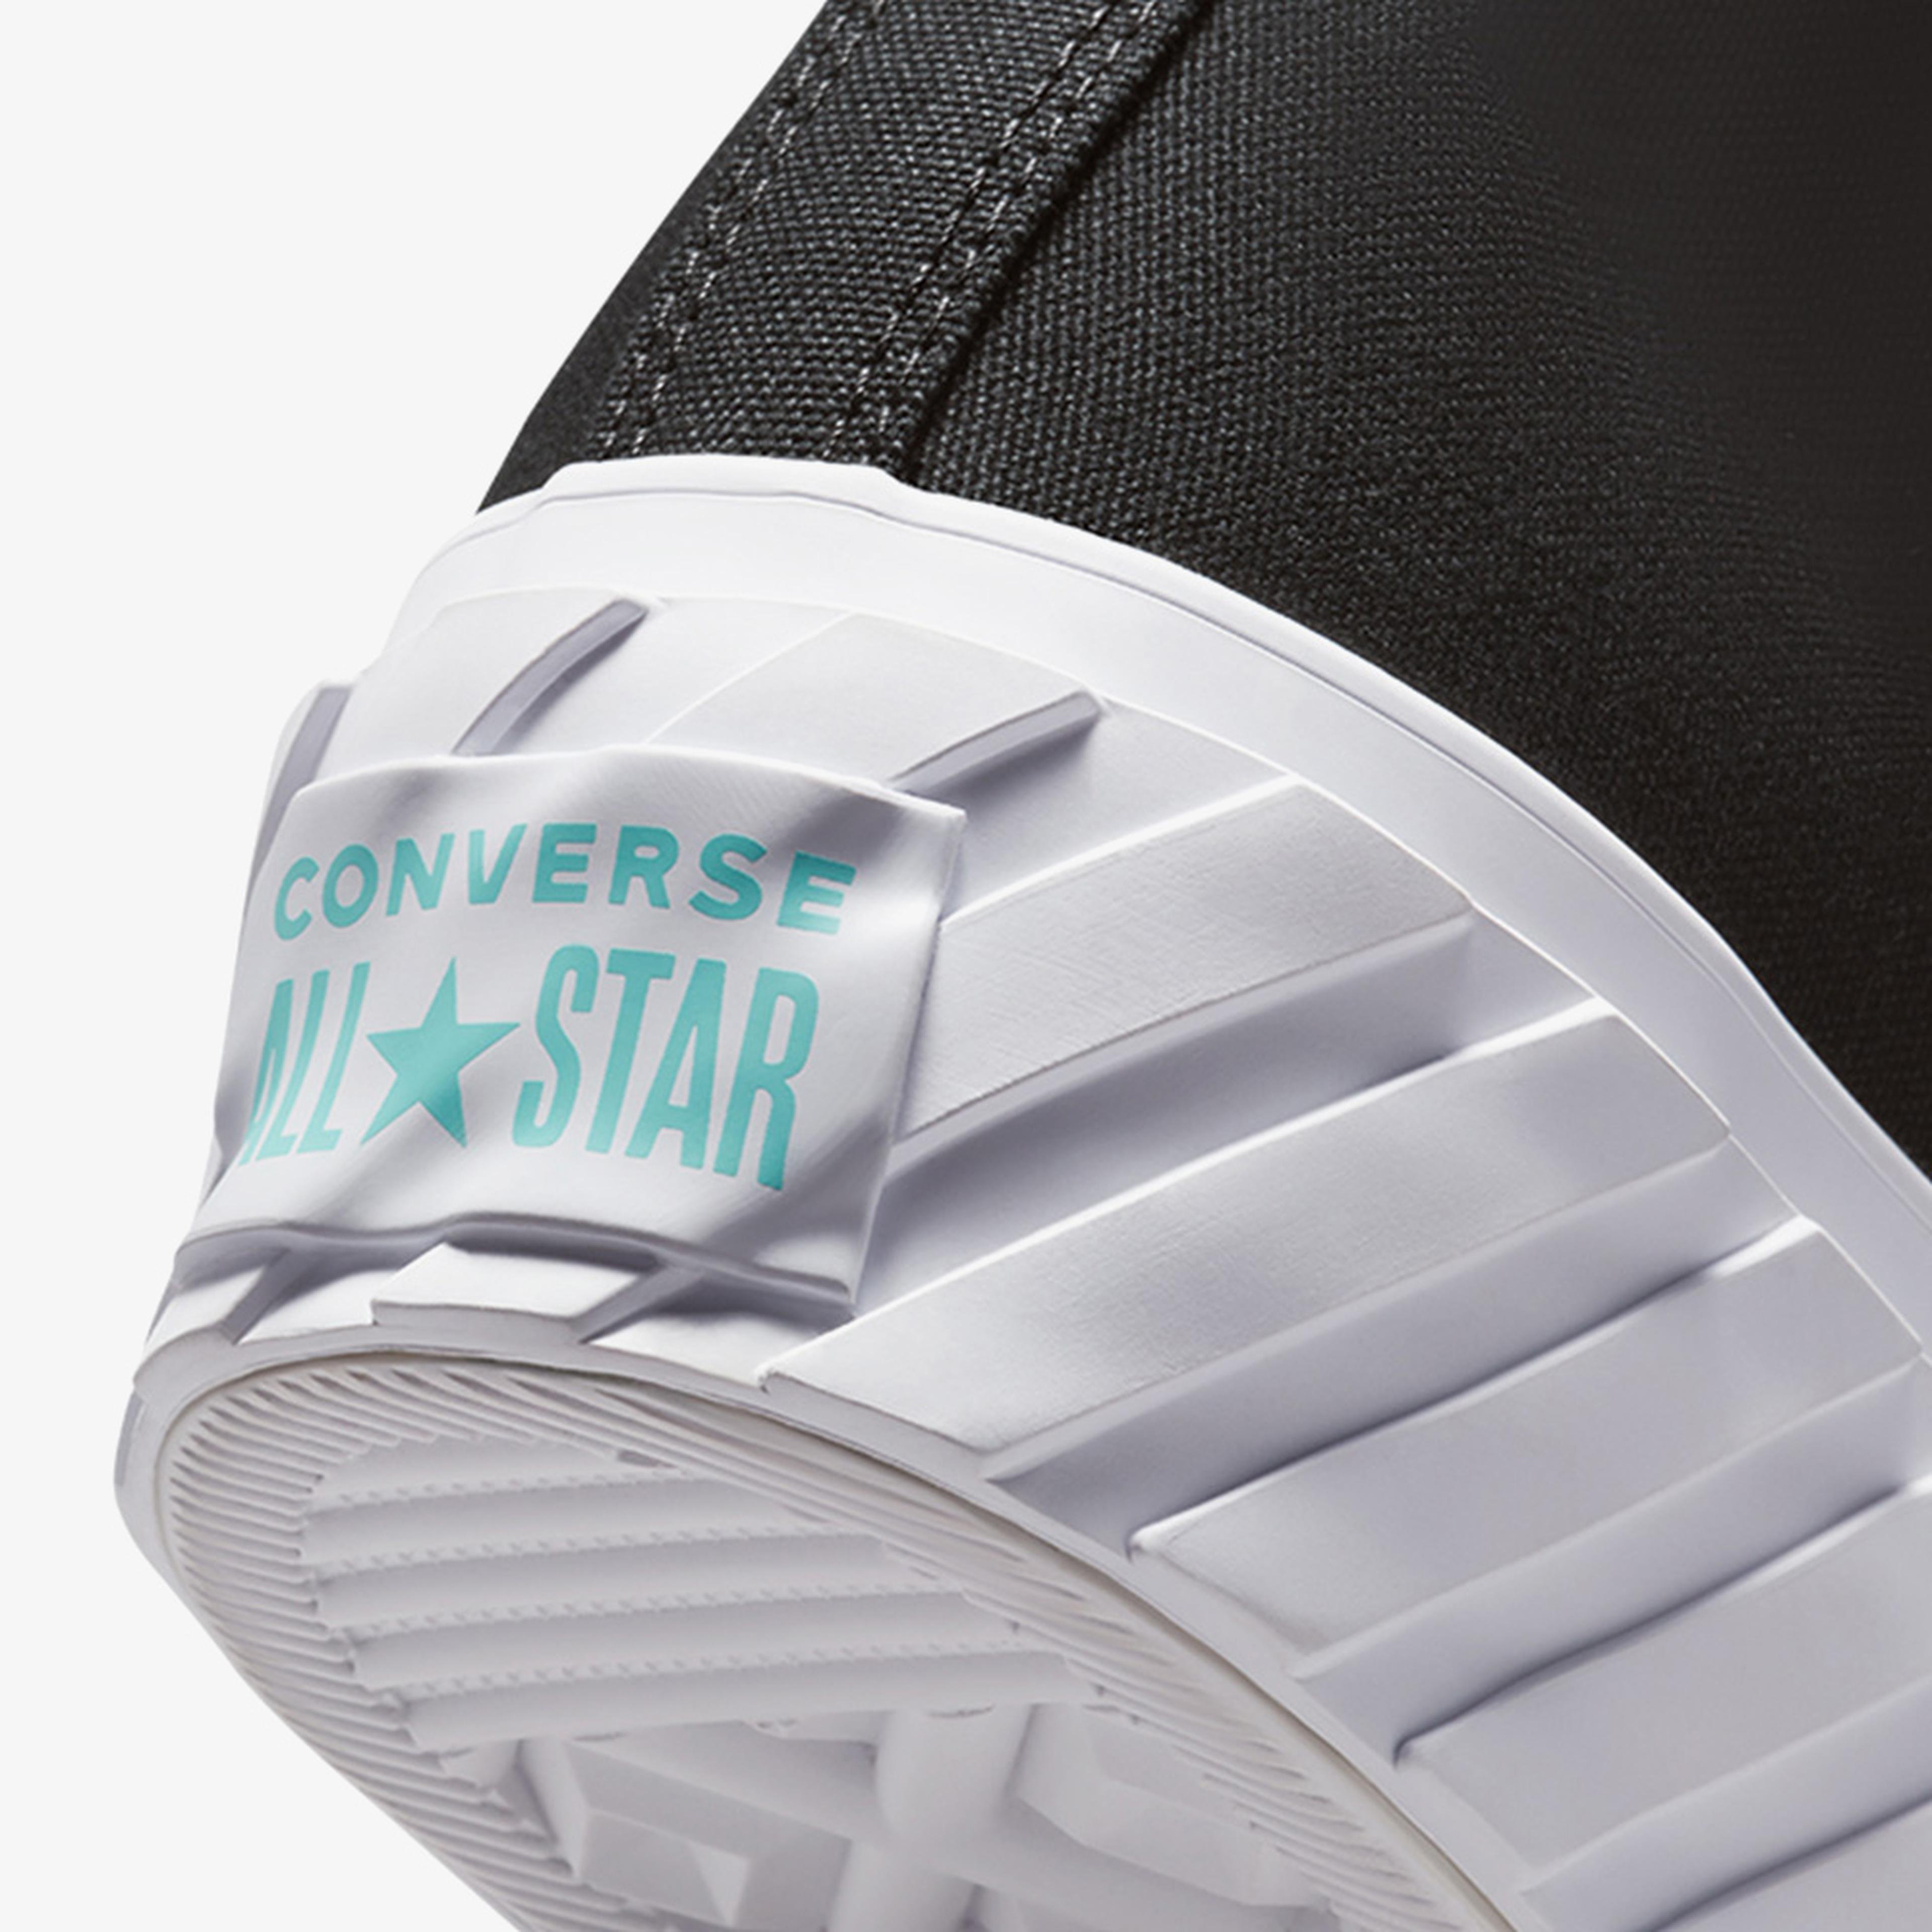 Converse Chuck Taylor All Star Lift 2X Hi Kadin Platform Siyah Sneaker